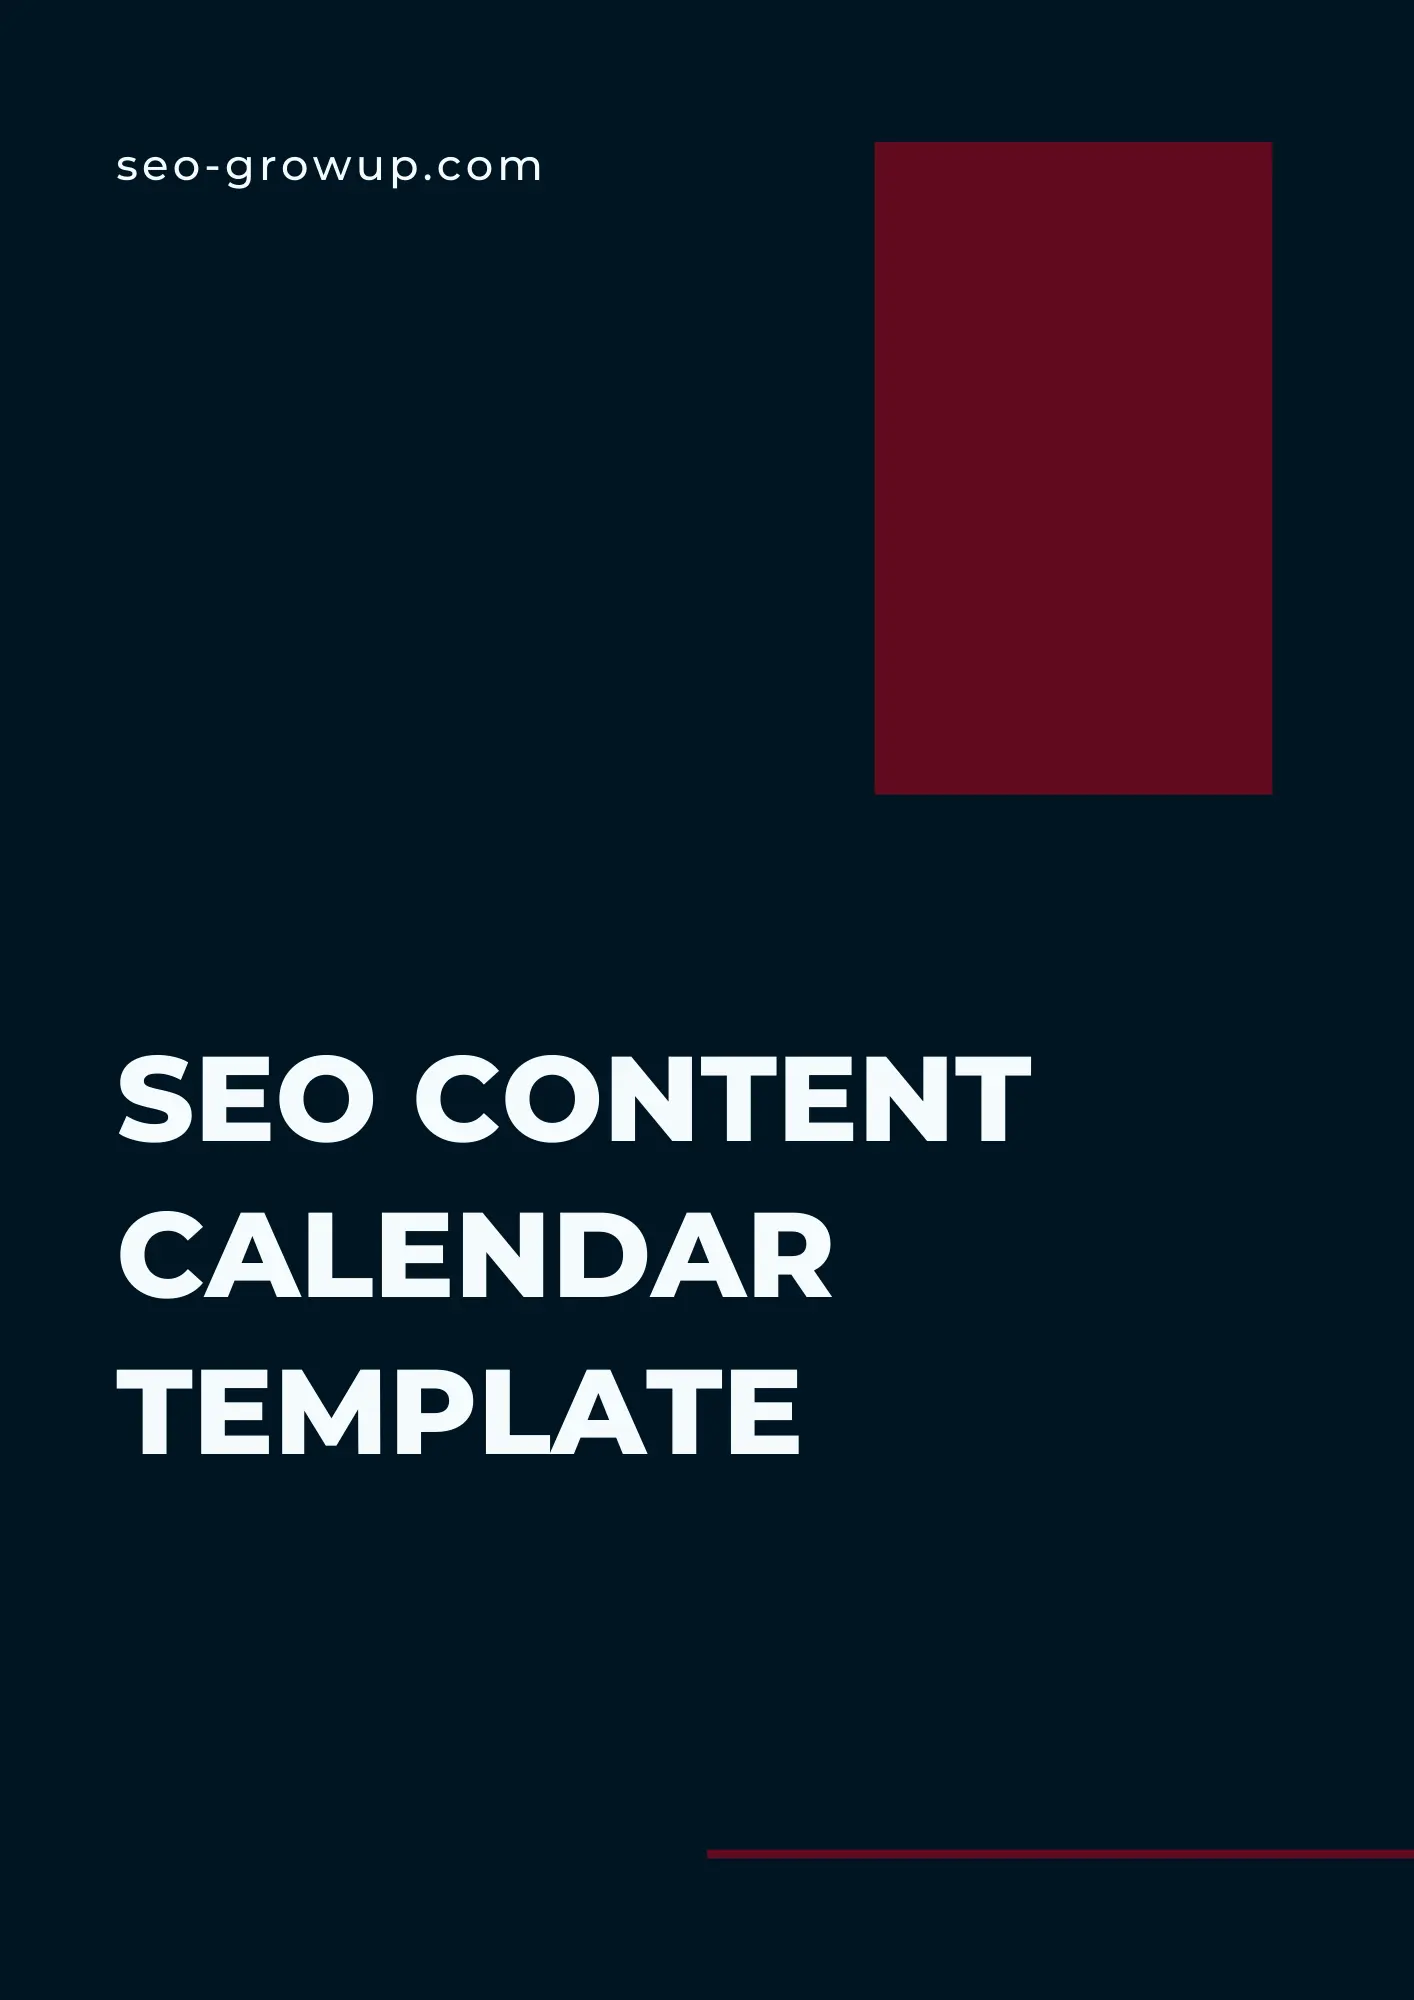 SEO Content Calendar Template